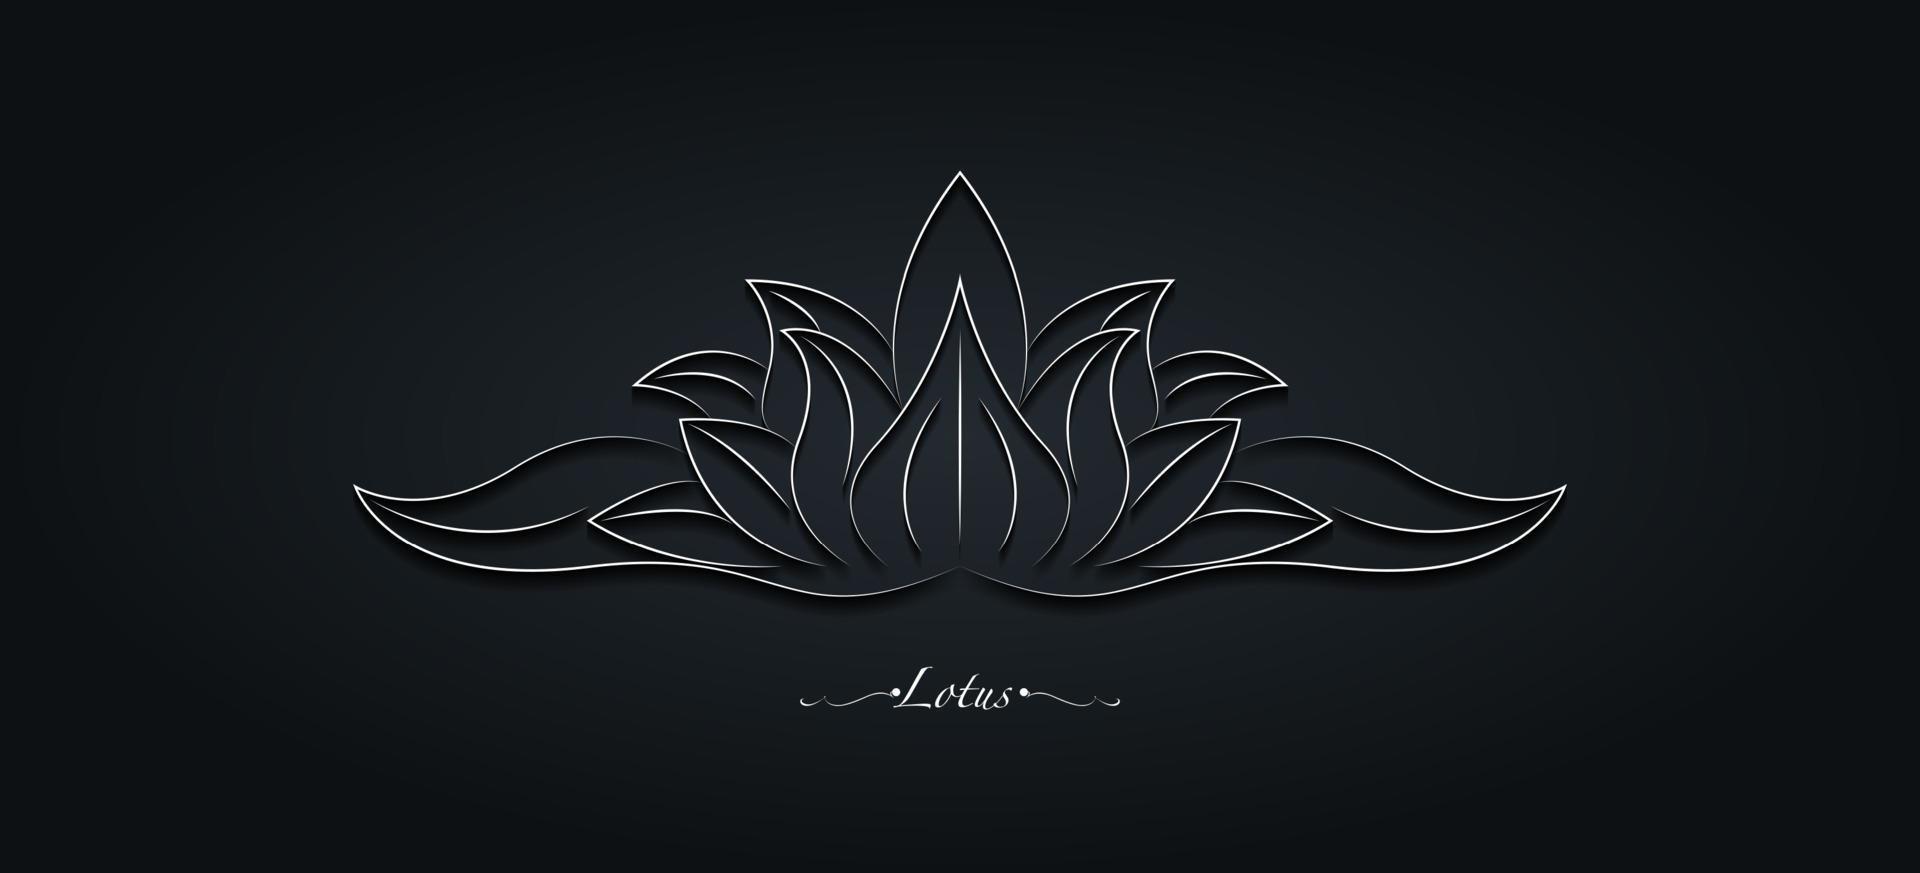 vit helig lotus blomma, stiliserade blommig prydnad, linje konst logotyp design. blomma blomma symbol av yoga, spa, skönhet salong, kosmetika, koppla av, varumärke stil. vektor isolerat på svart bakgrund